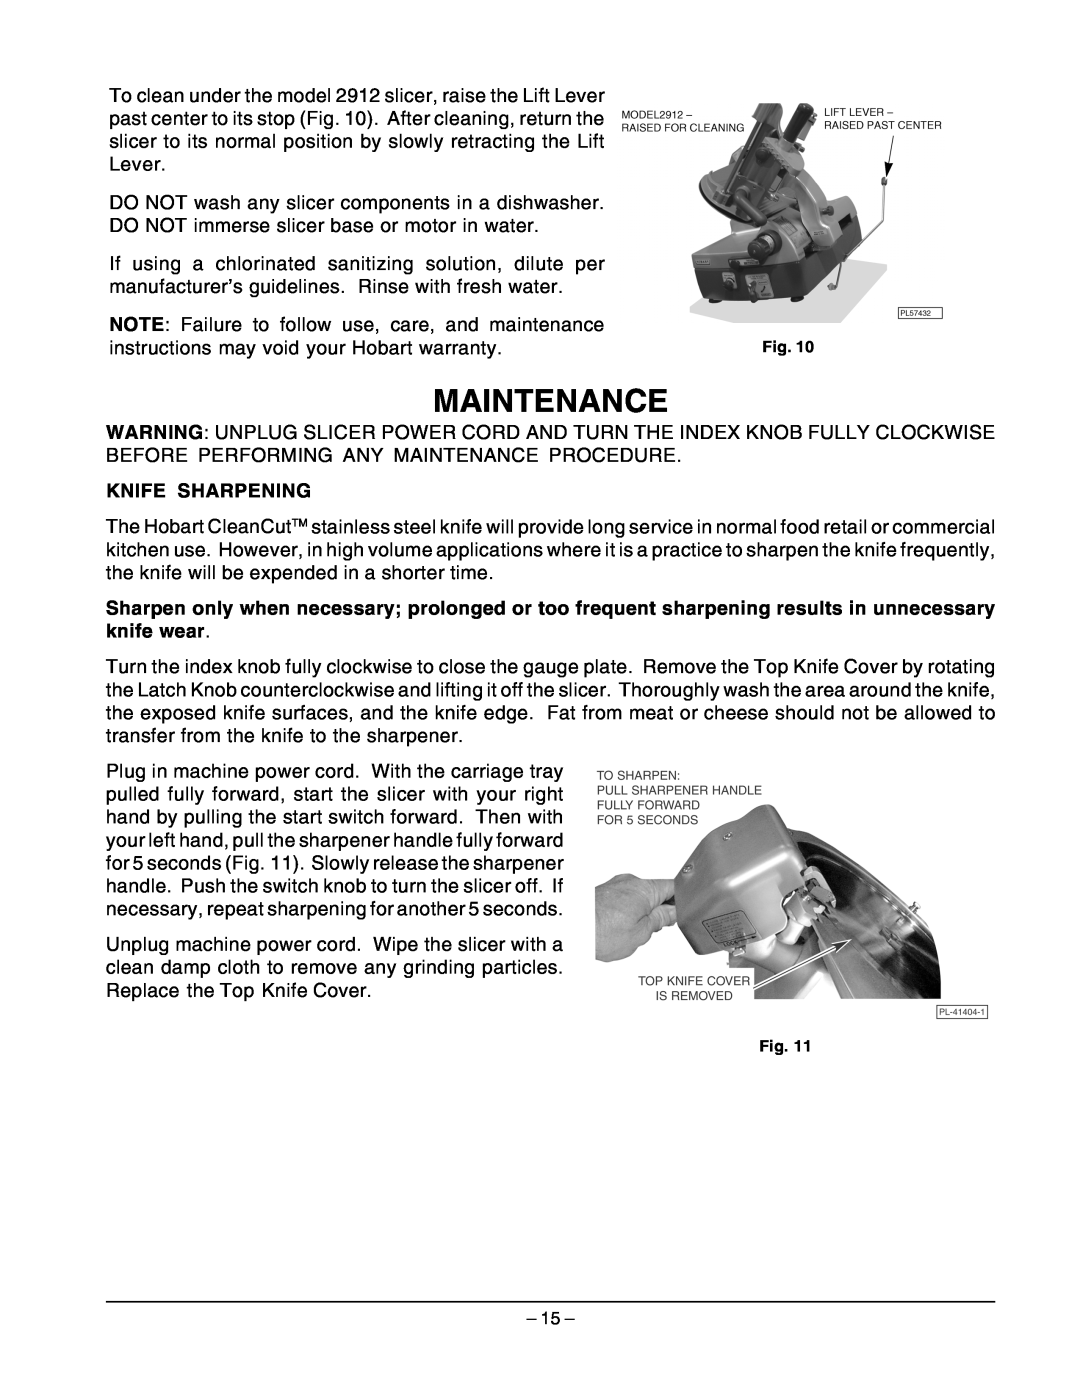 Hobart 2812 manual Maintenance, Knife Sharpening 